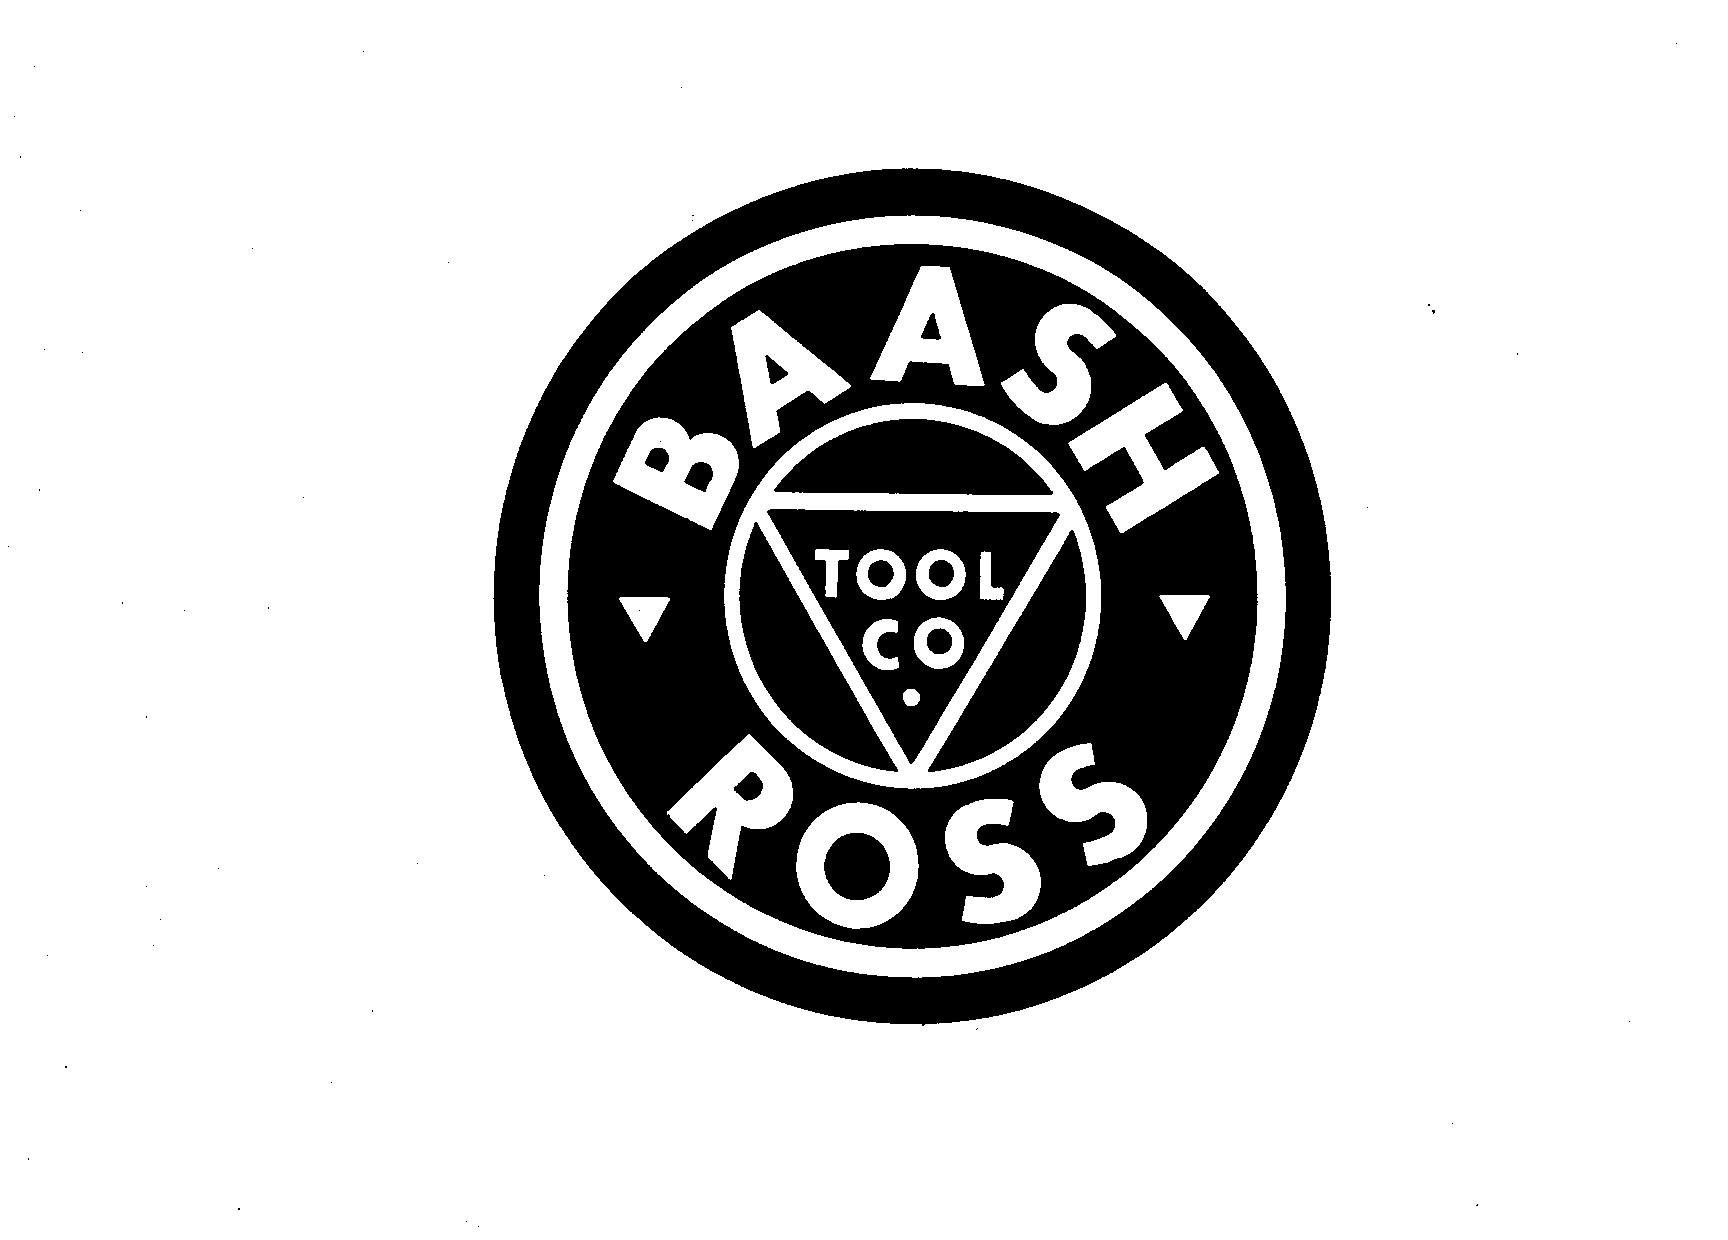  BAASH-ROSS TOOL CO.